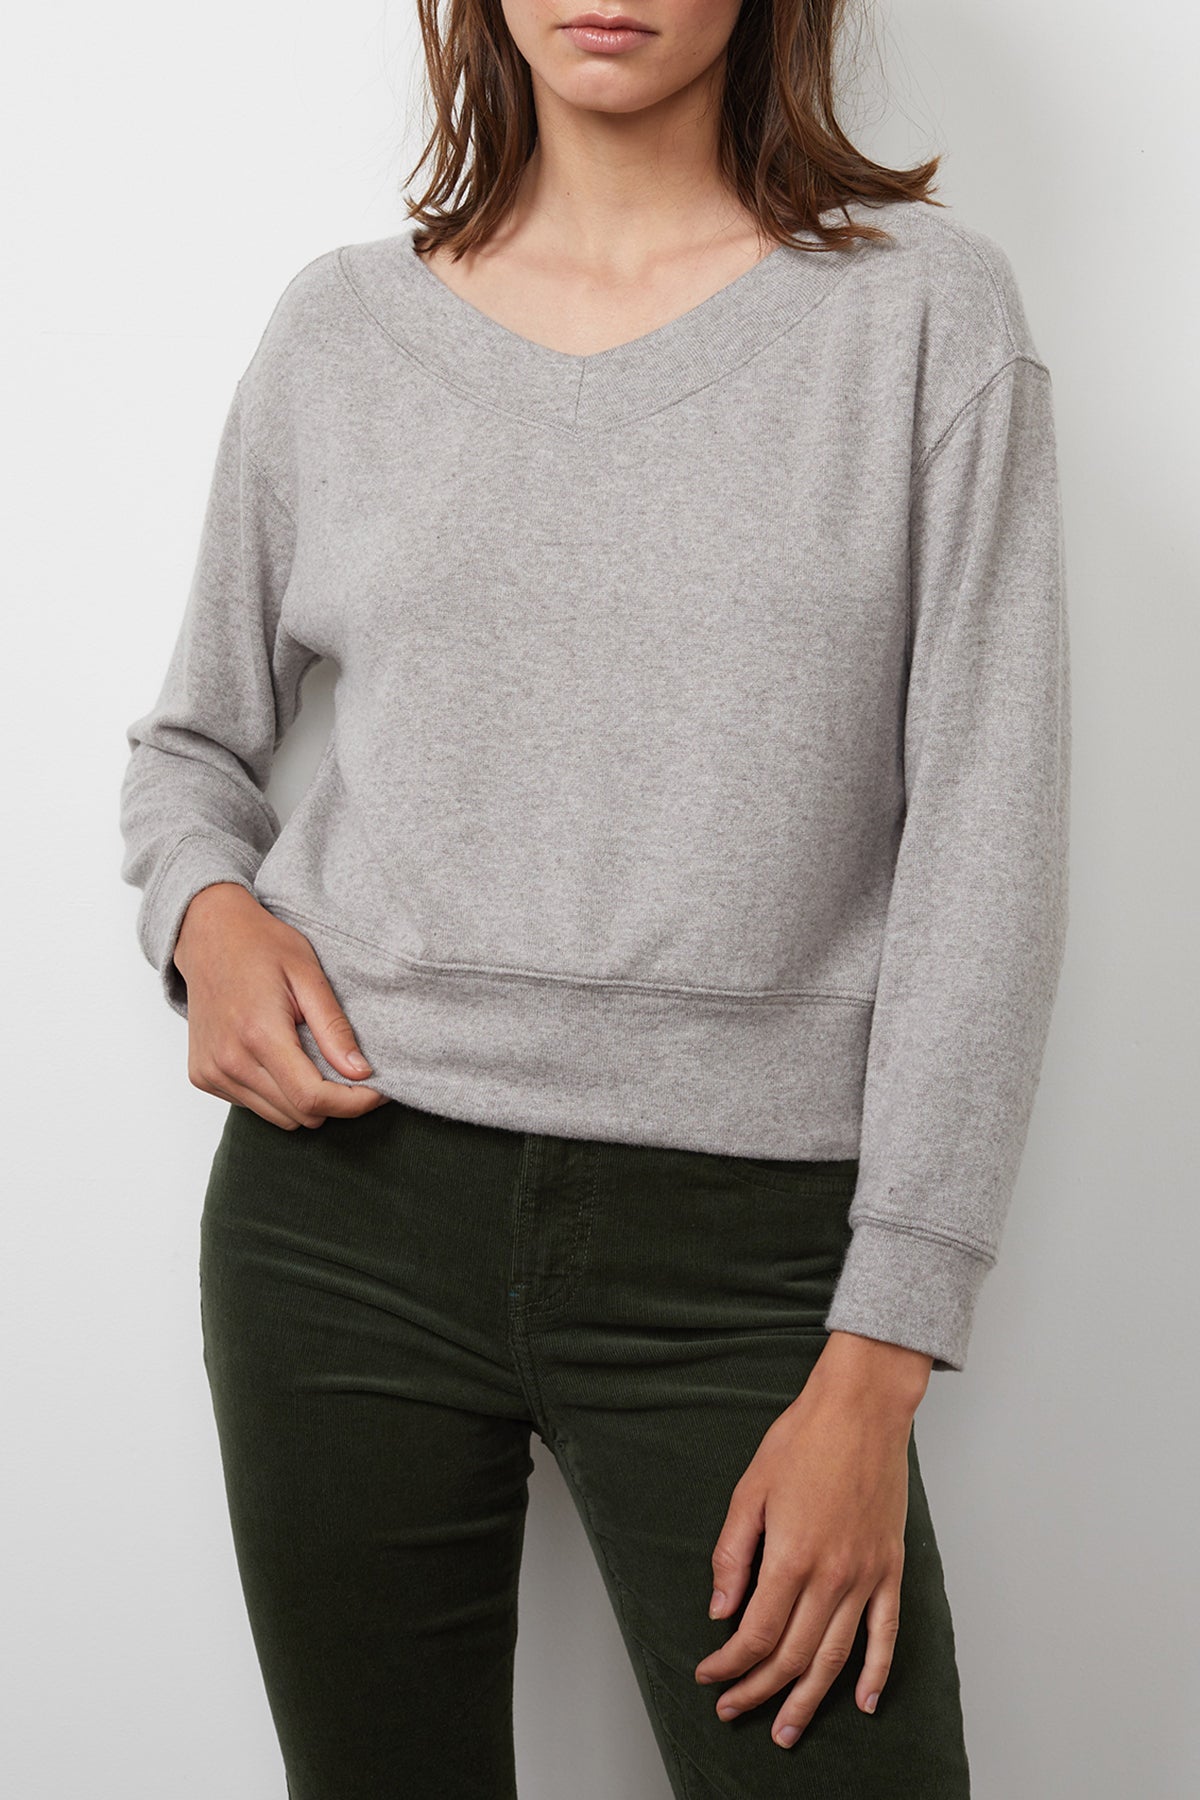 Sloe Cropped Sweater Grey-24782651162817